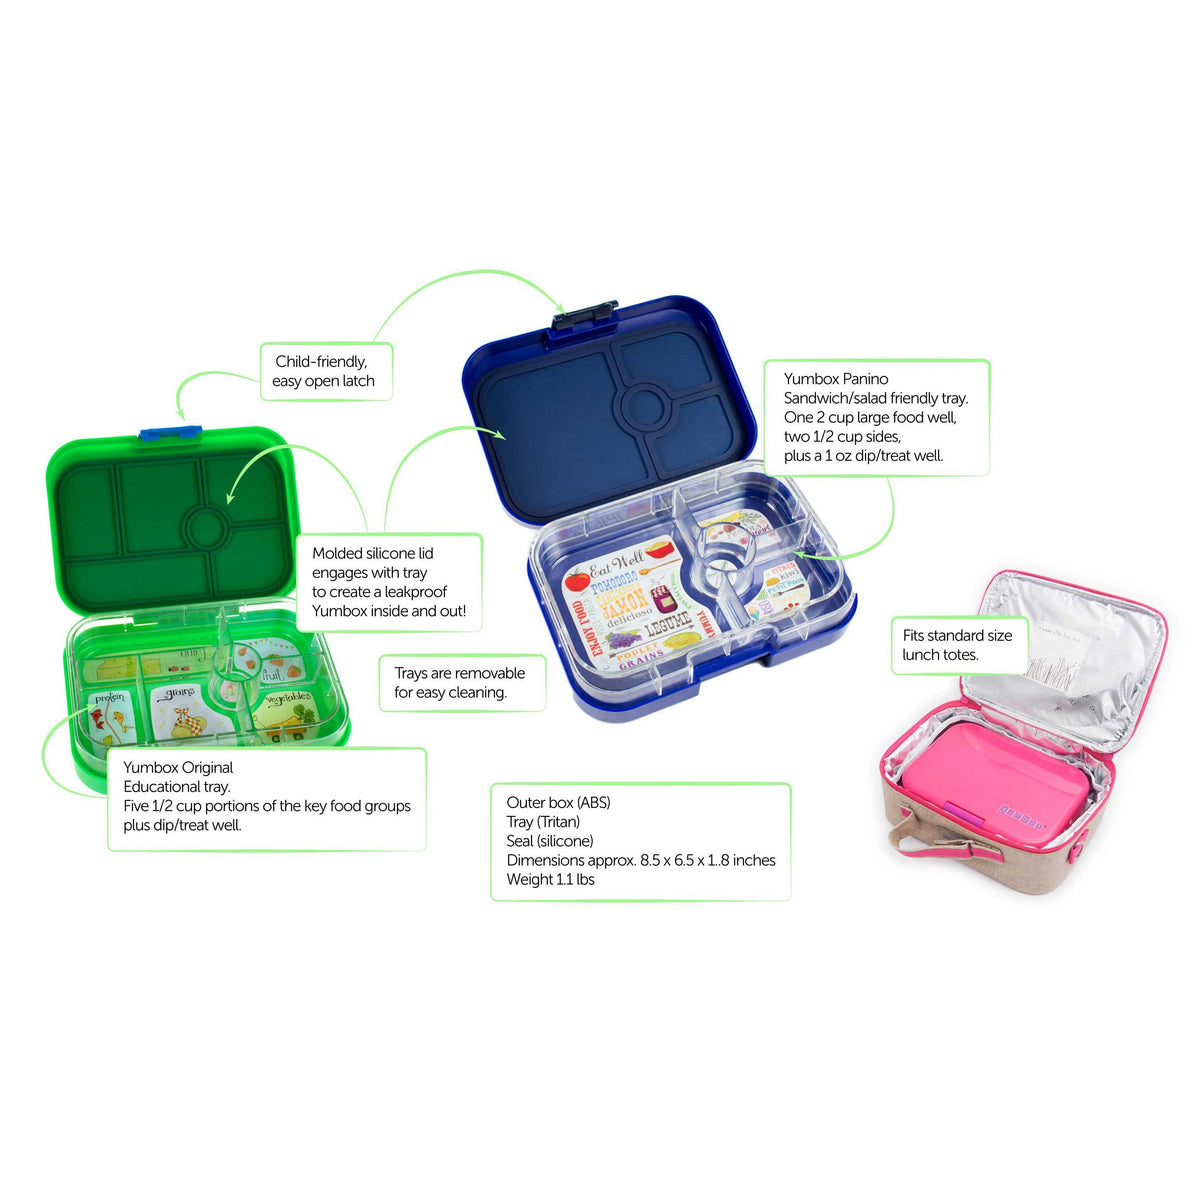 yumbox-panino-tribeca-pink-nyc-4-compartment-lunch-box- (5)